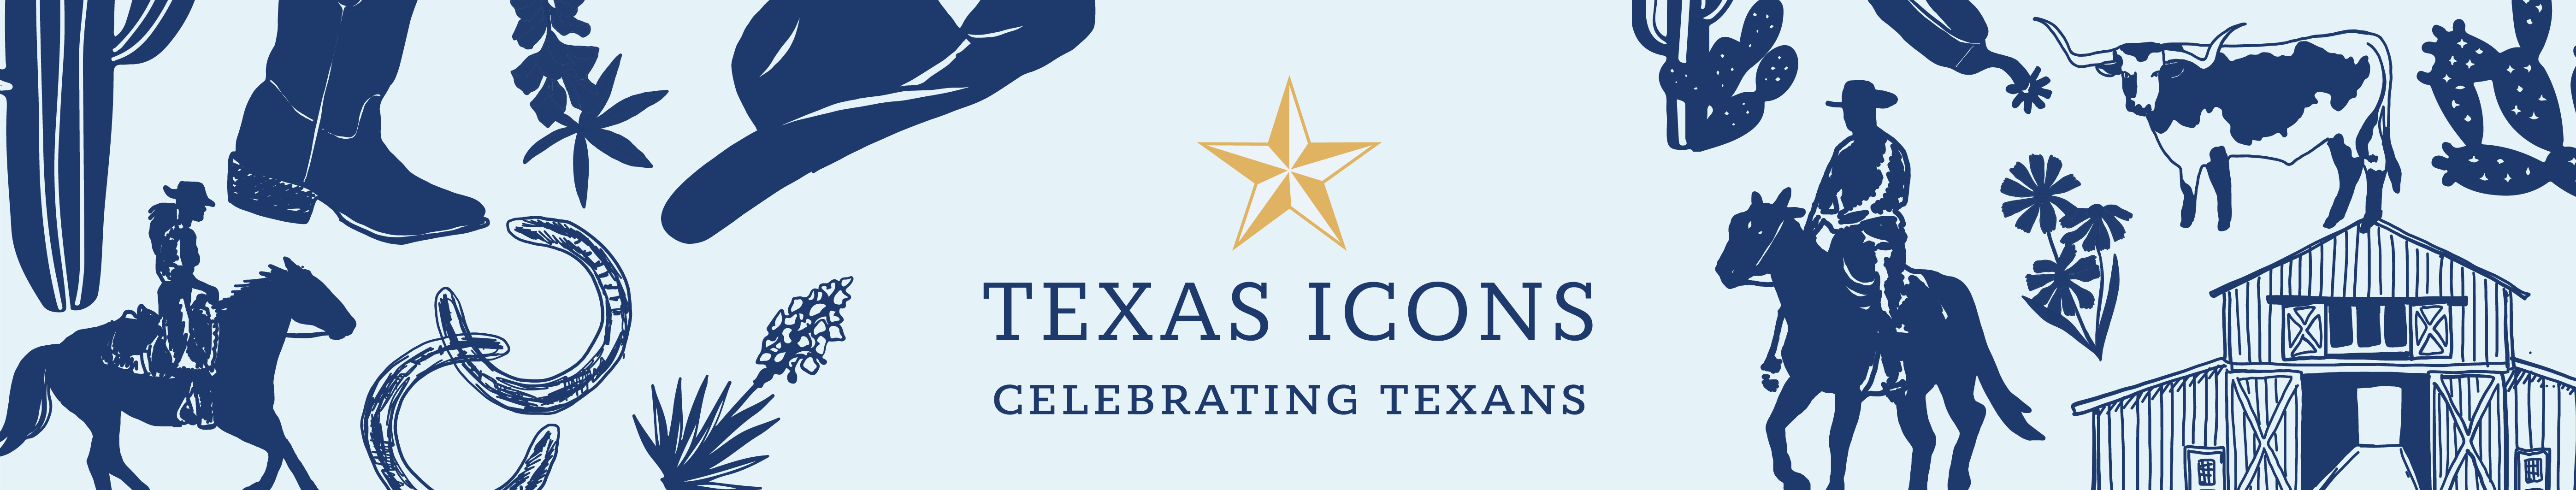 Texas Icons - Celebrating Texans